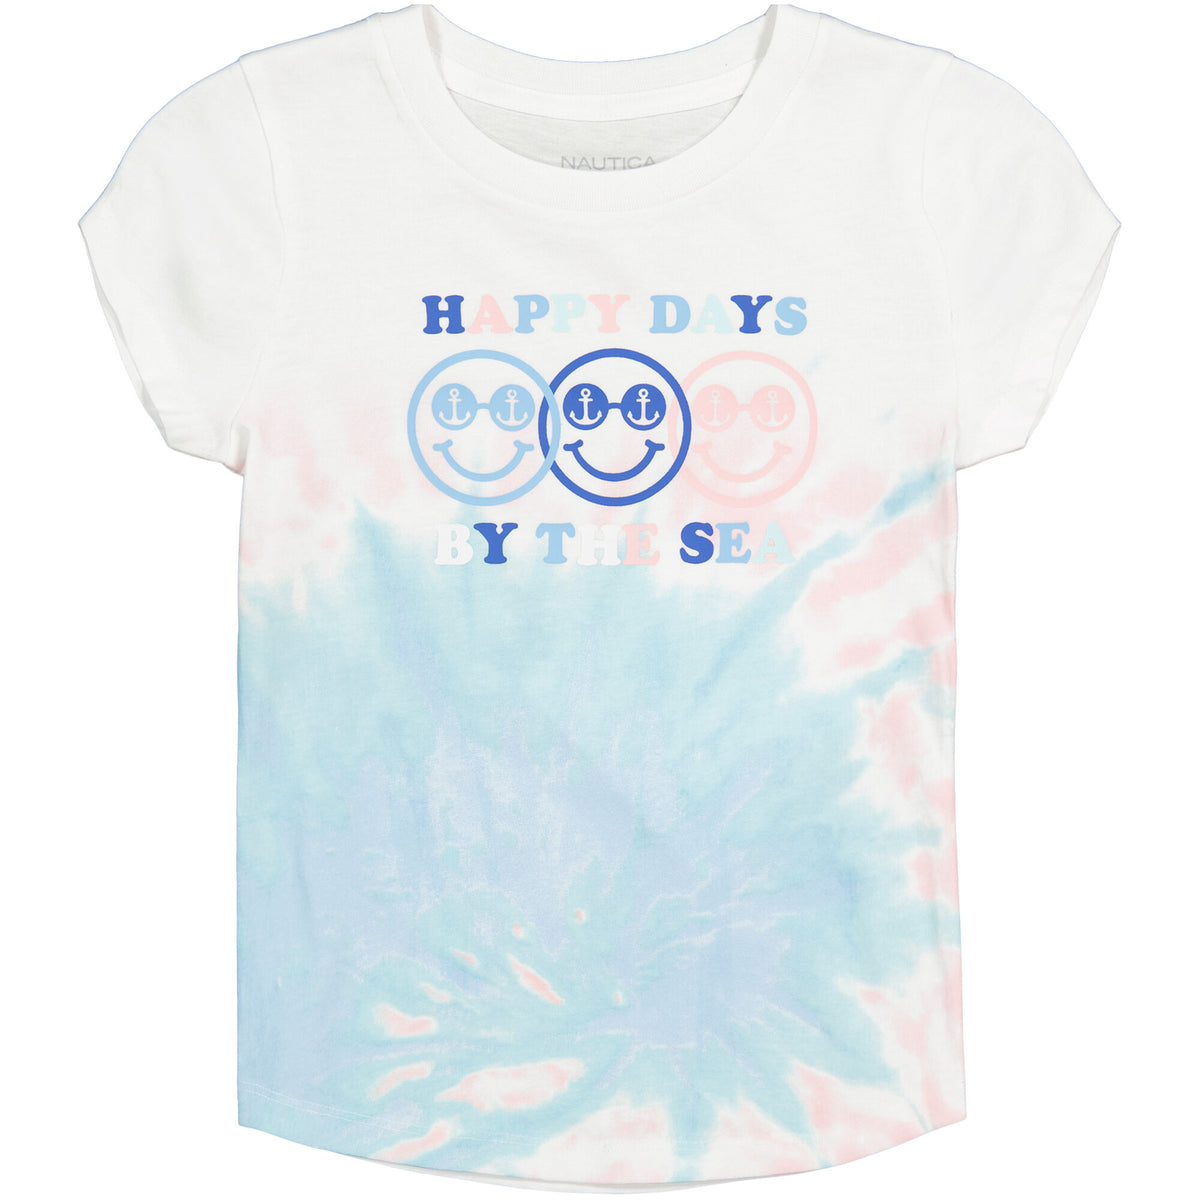 Nautica Toddler Girls' Happy Days T-Shirt (2T-4T) Antique White Wash